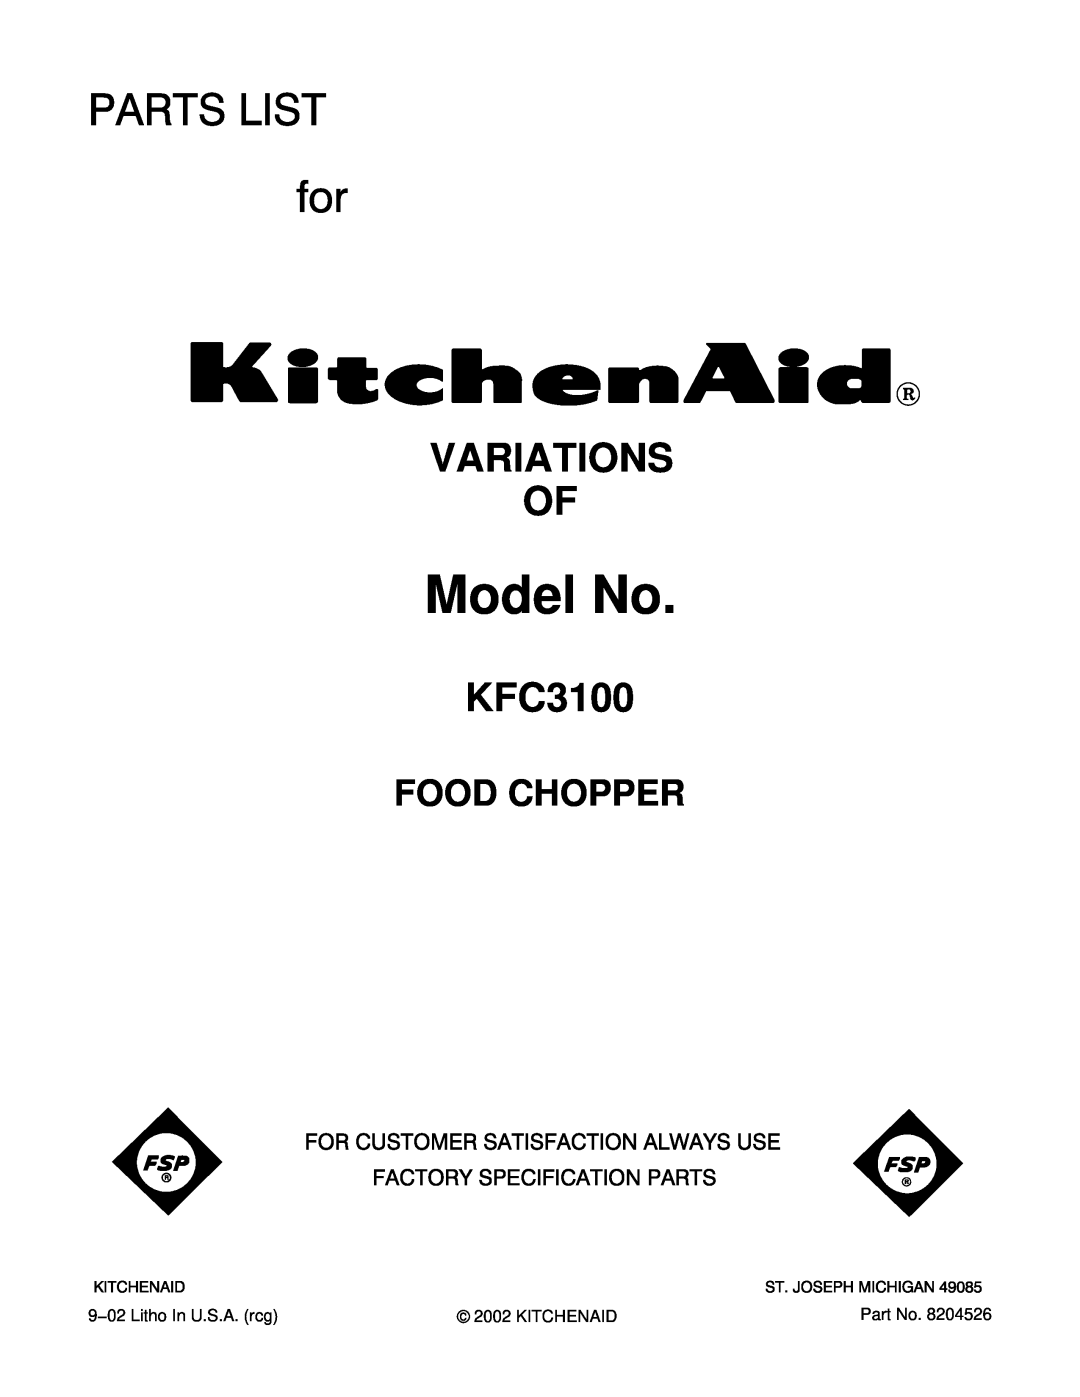 KitchenAid KFC3100 manual Model No, Variations Of, Food Chopper 